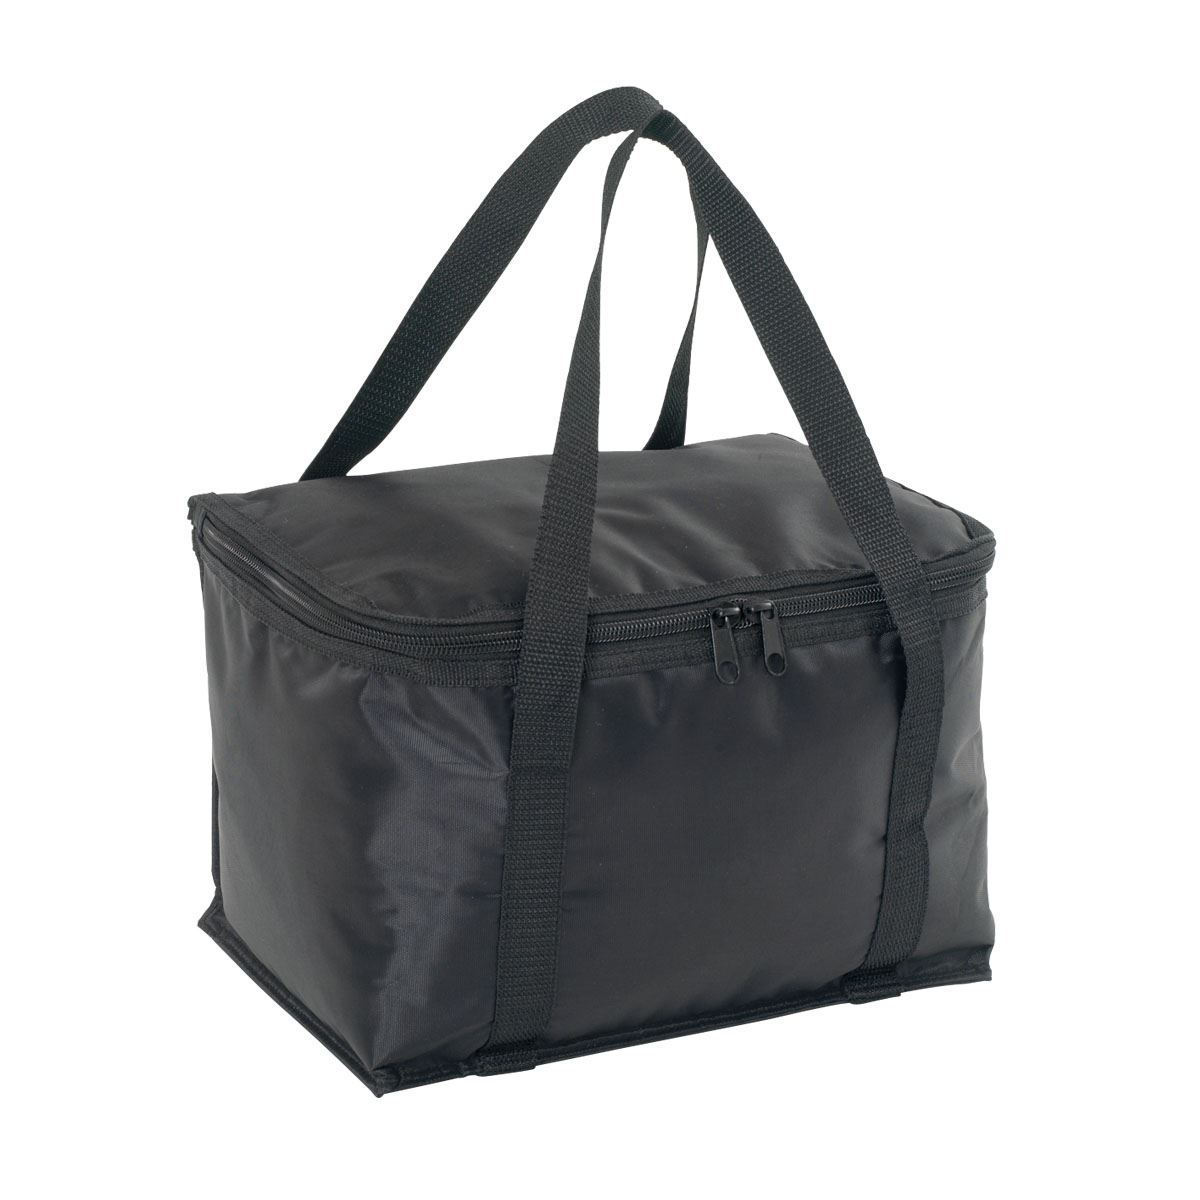 Max Cooler | custom cooler bags | personalized cooler bags ...